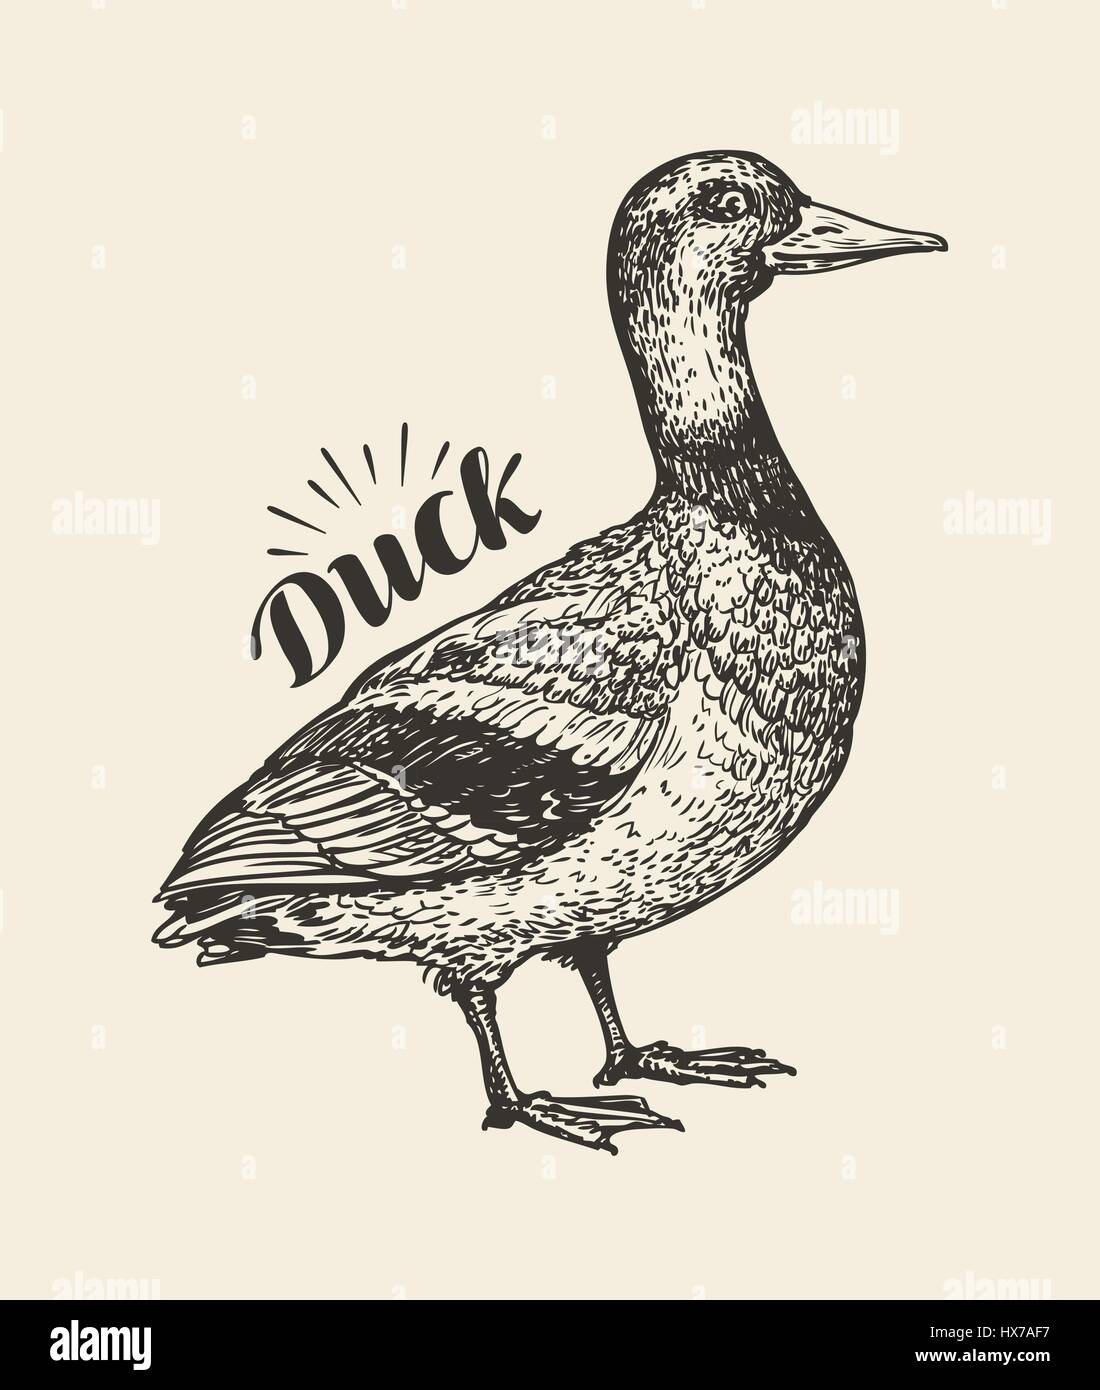 Handgezeichnete Ente. Vogel, Stockente, Bauernhof Tiere Skizze. Vektor-illustration Stock Vektor